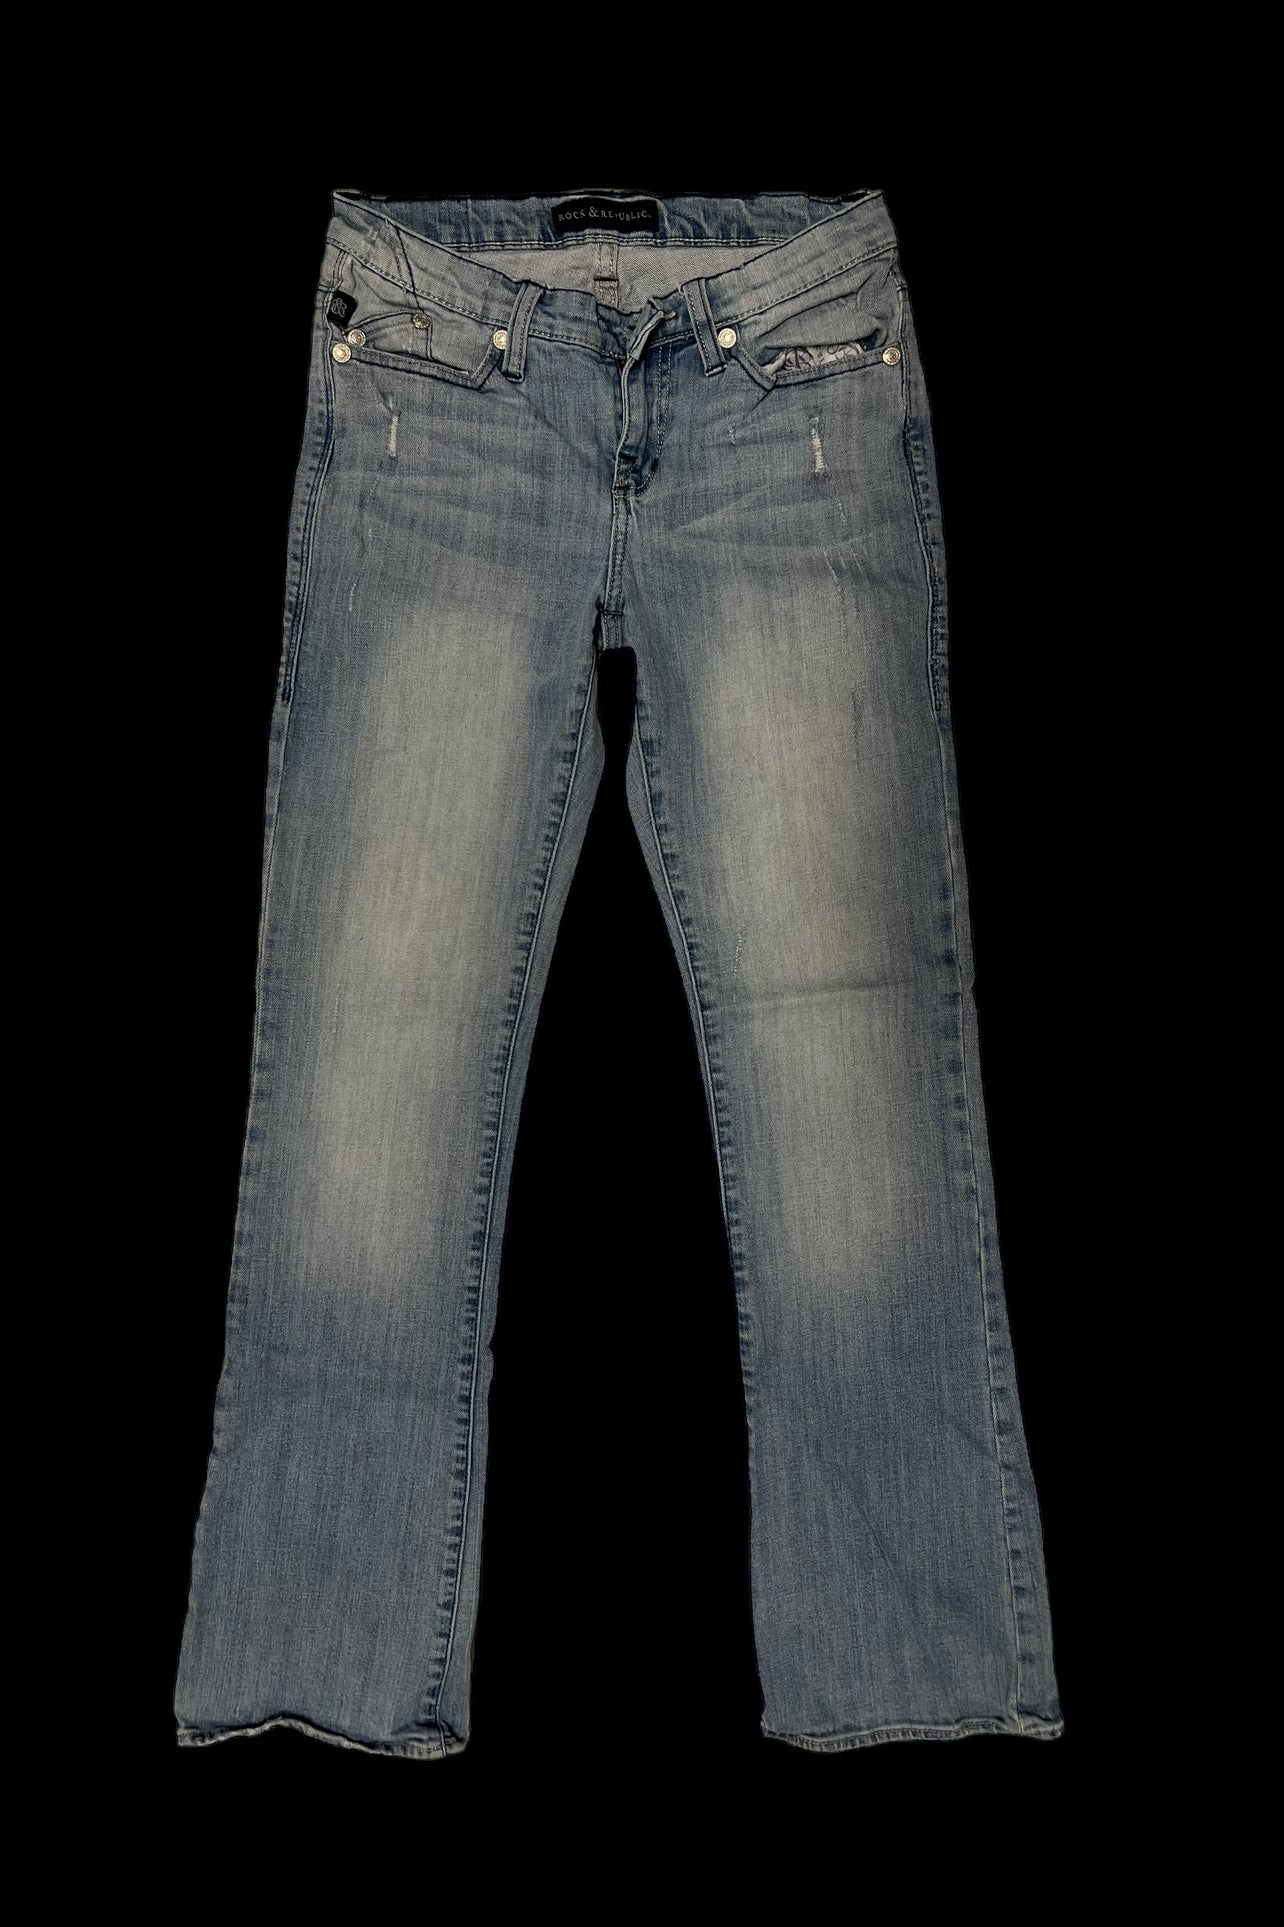 Rock & Republic jeans